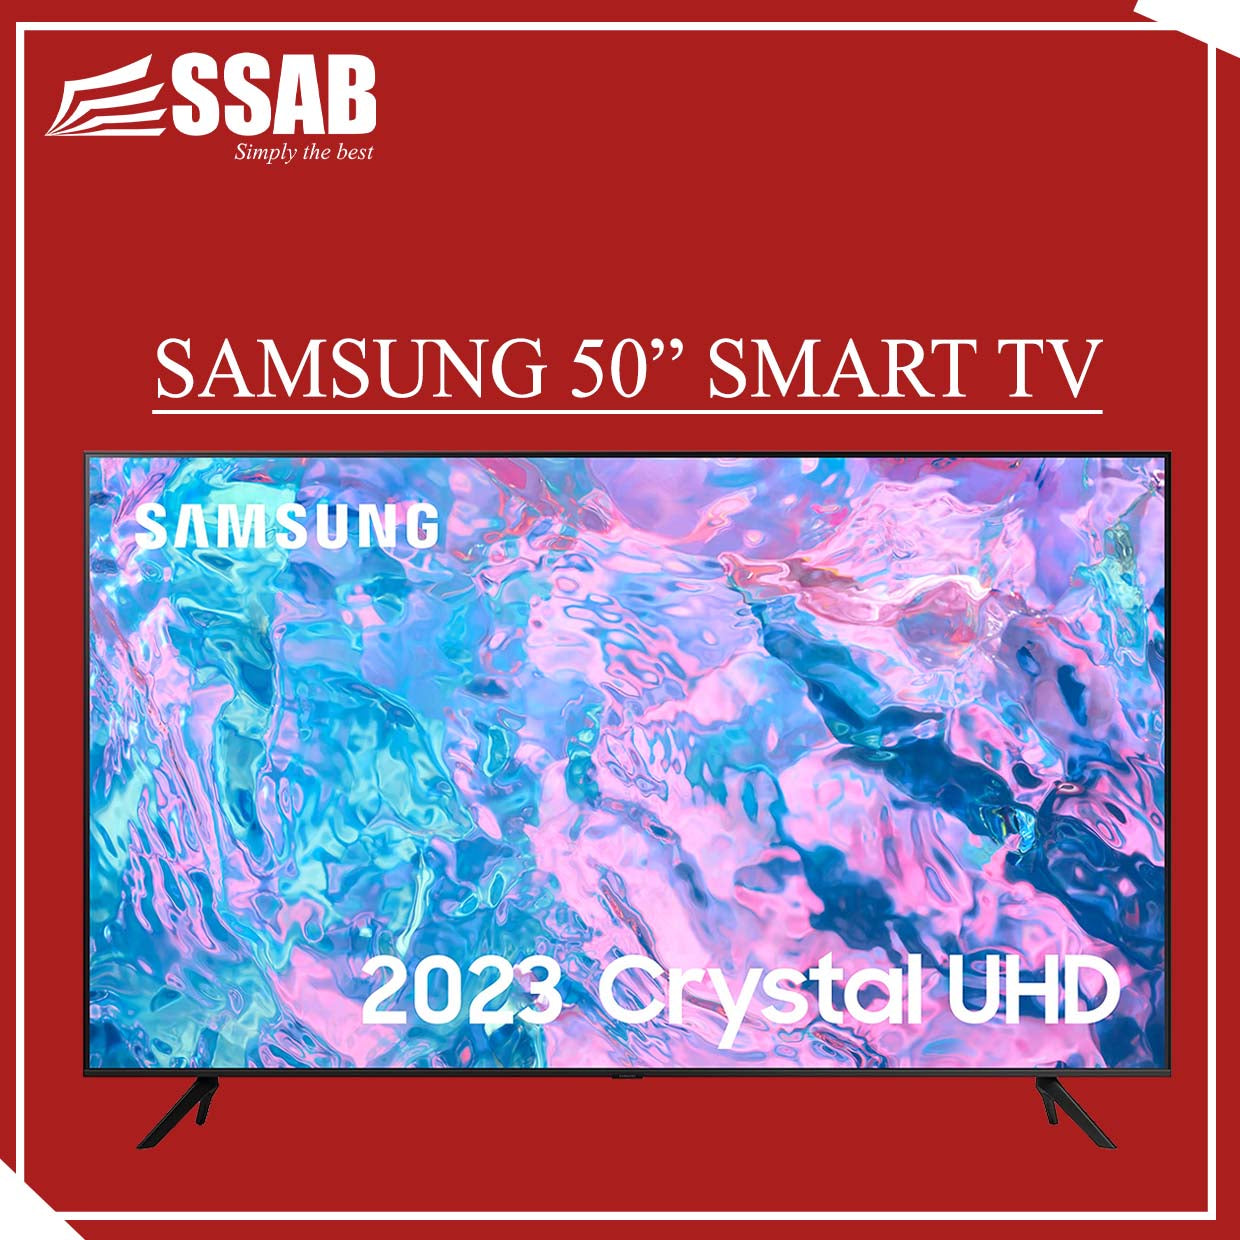 Samsung 50" Smart TV